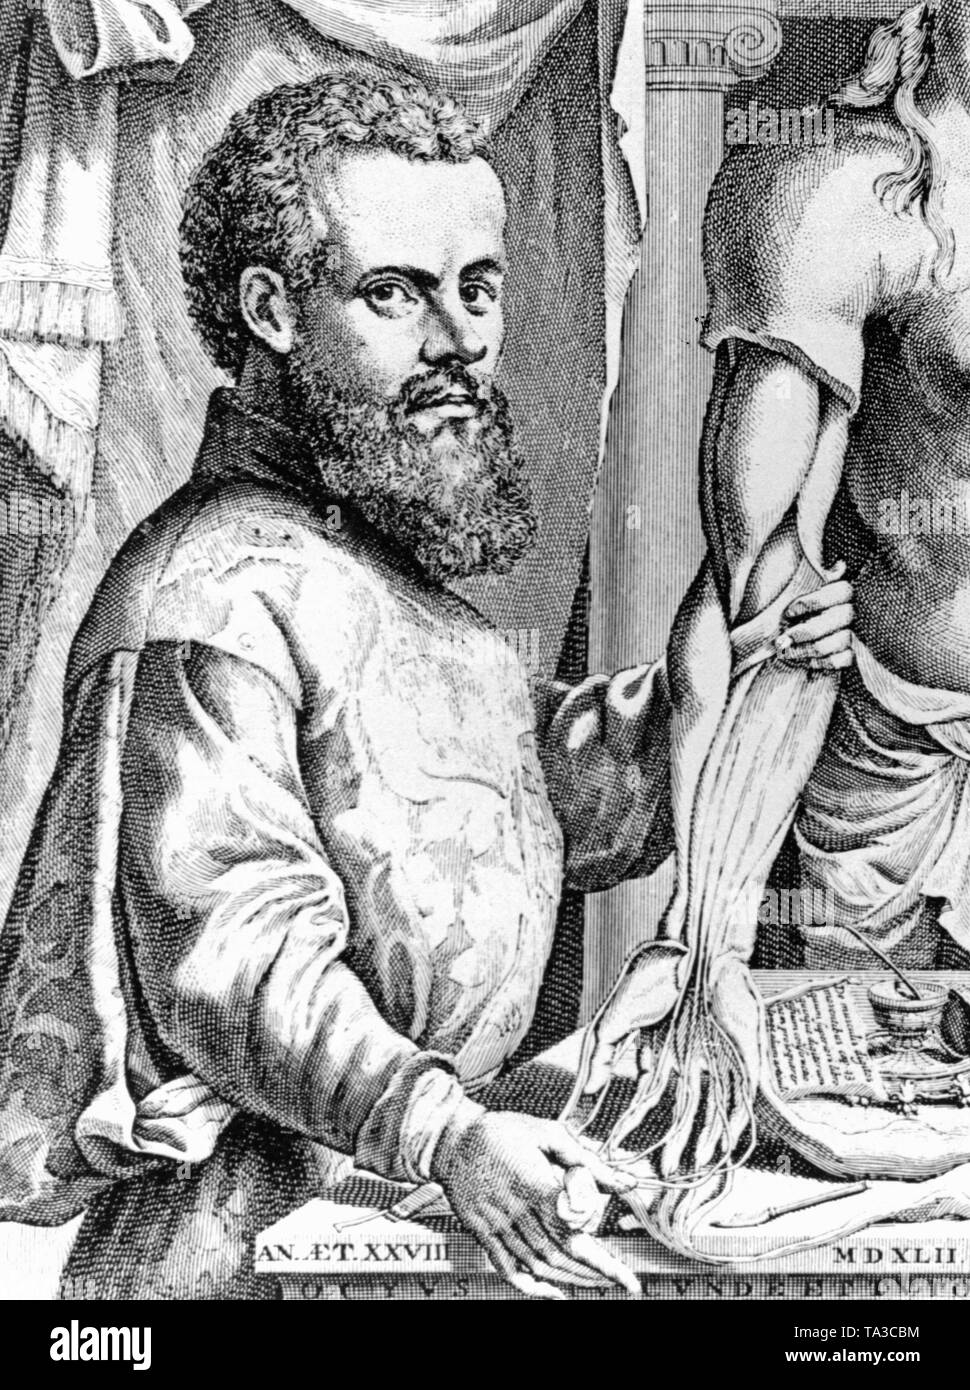 Portait of the Flemish anatomist Andreas Vesalius in his work 'De humani corporis fabrica libri septem'. Stock Photo